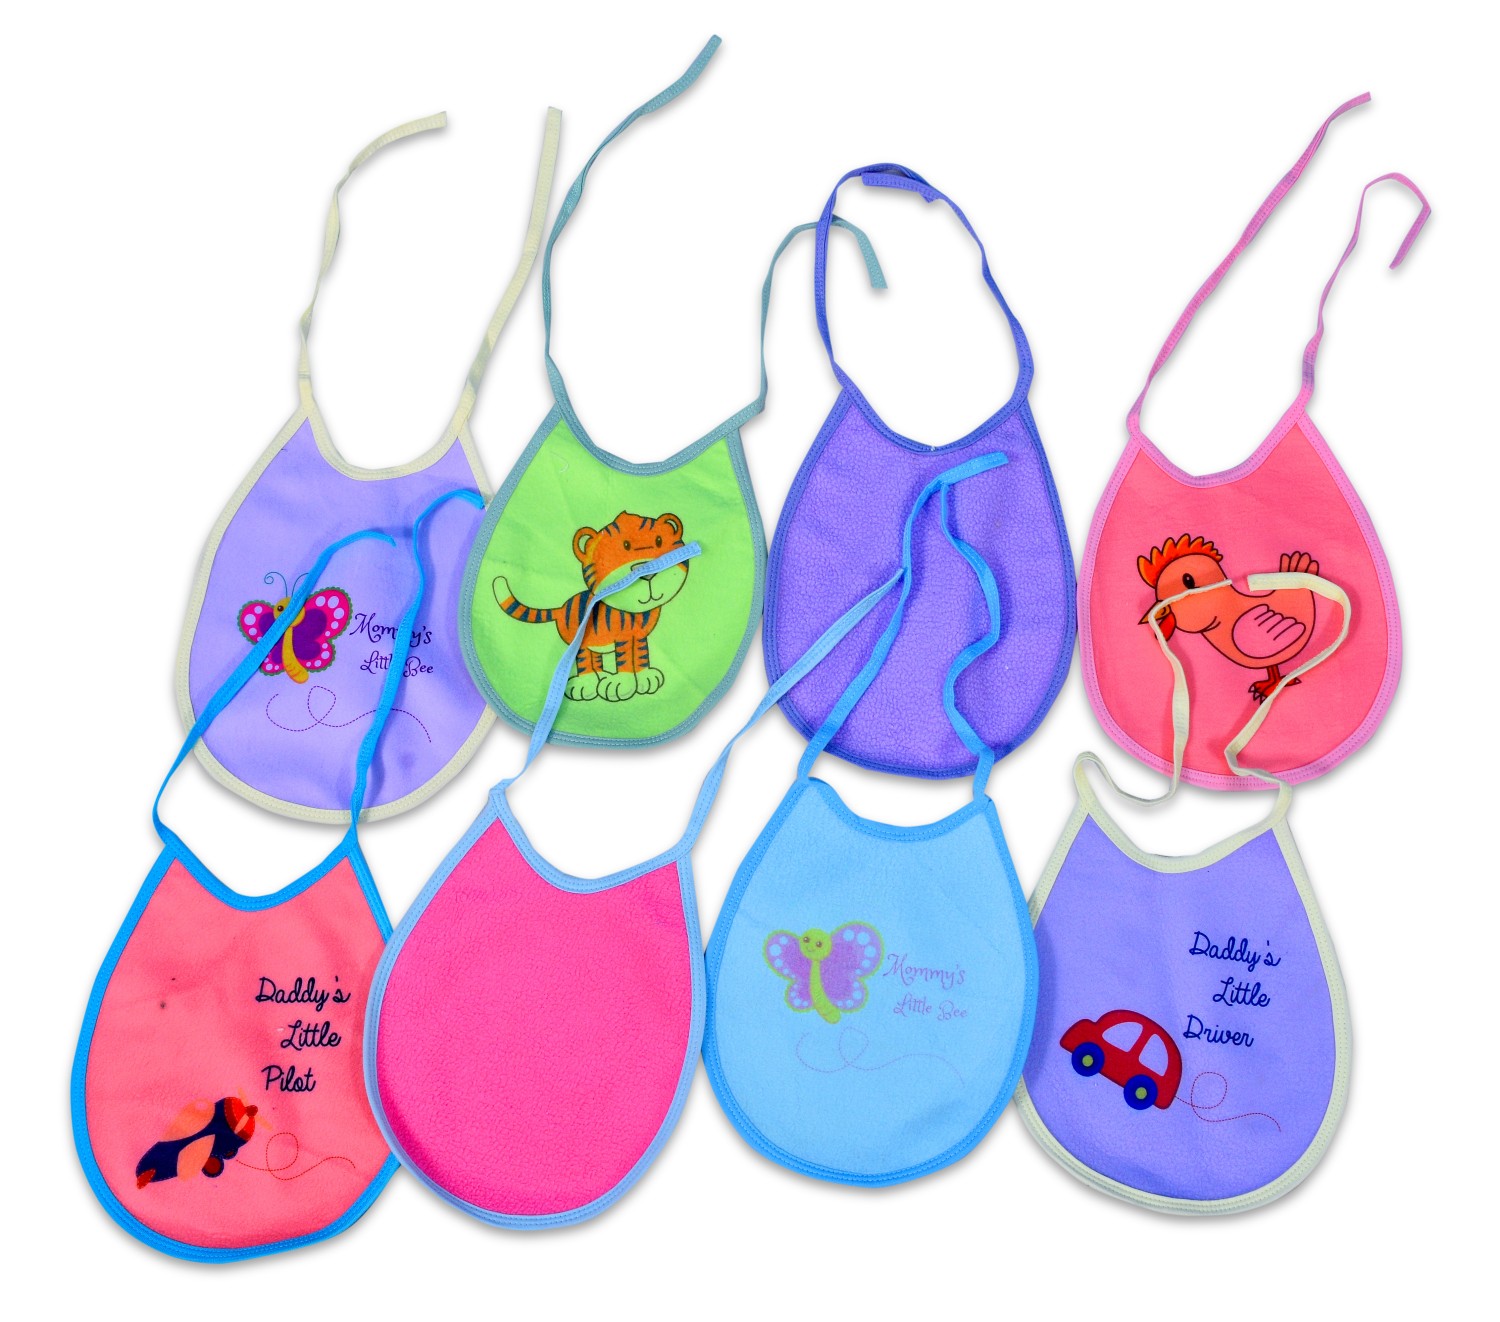 Soft cotton baby bibs• Premium-quality bibs for infants• Machine ...